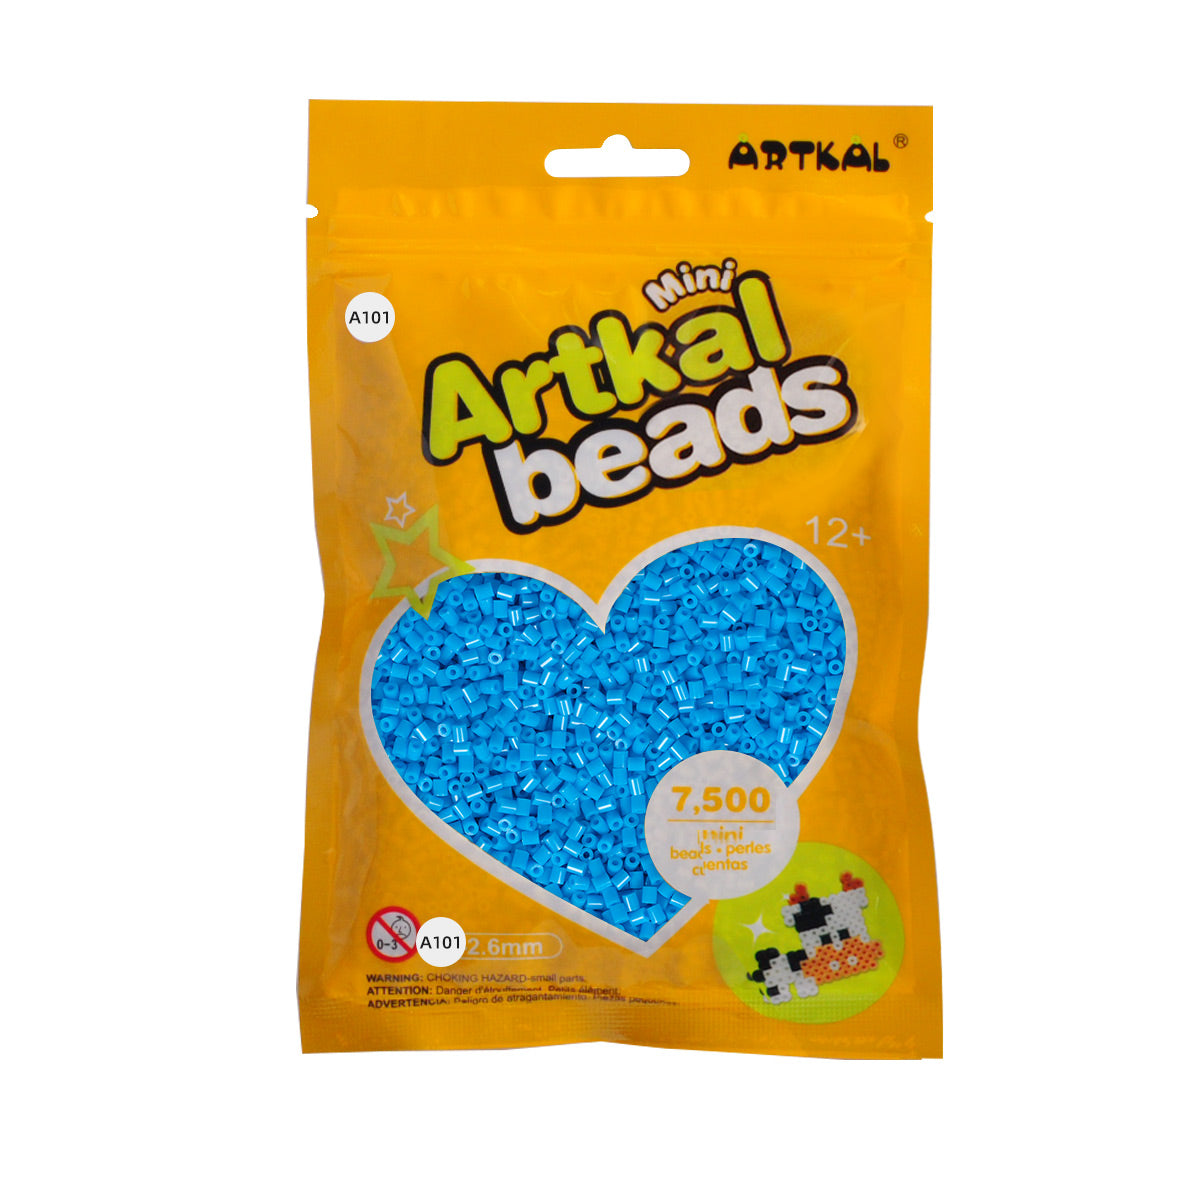 (A101-A157) A-2.6mm 7500P single pack mini artkal beads